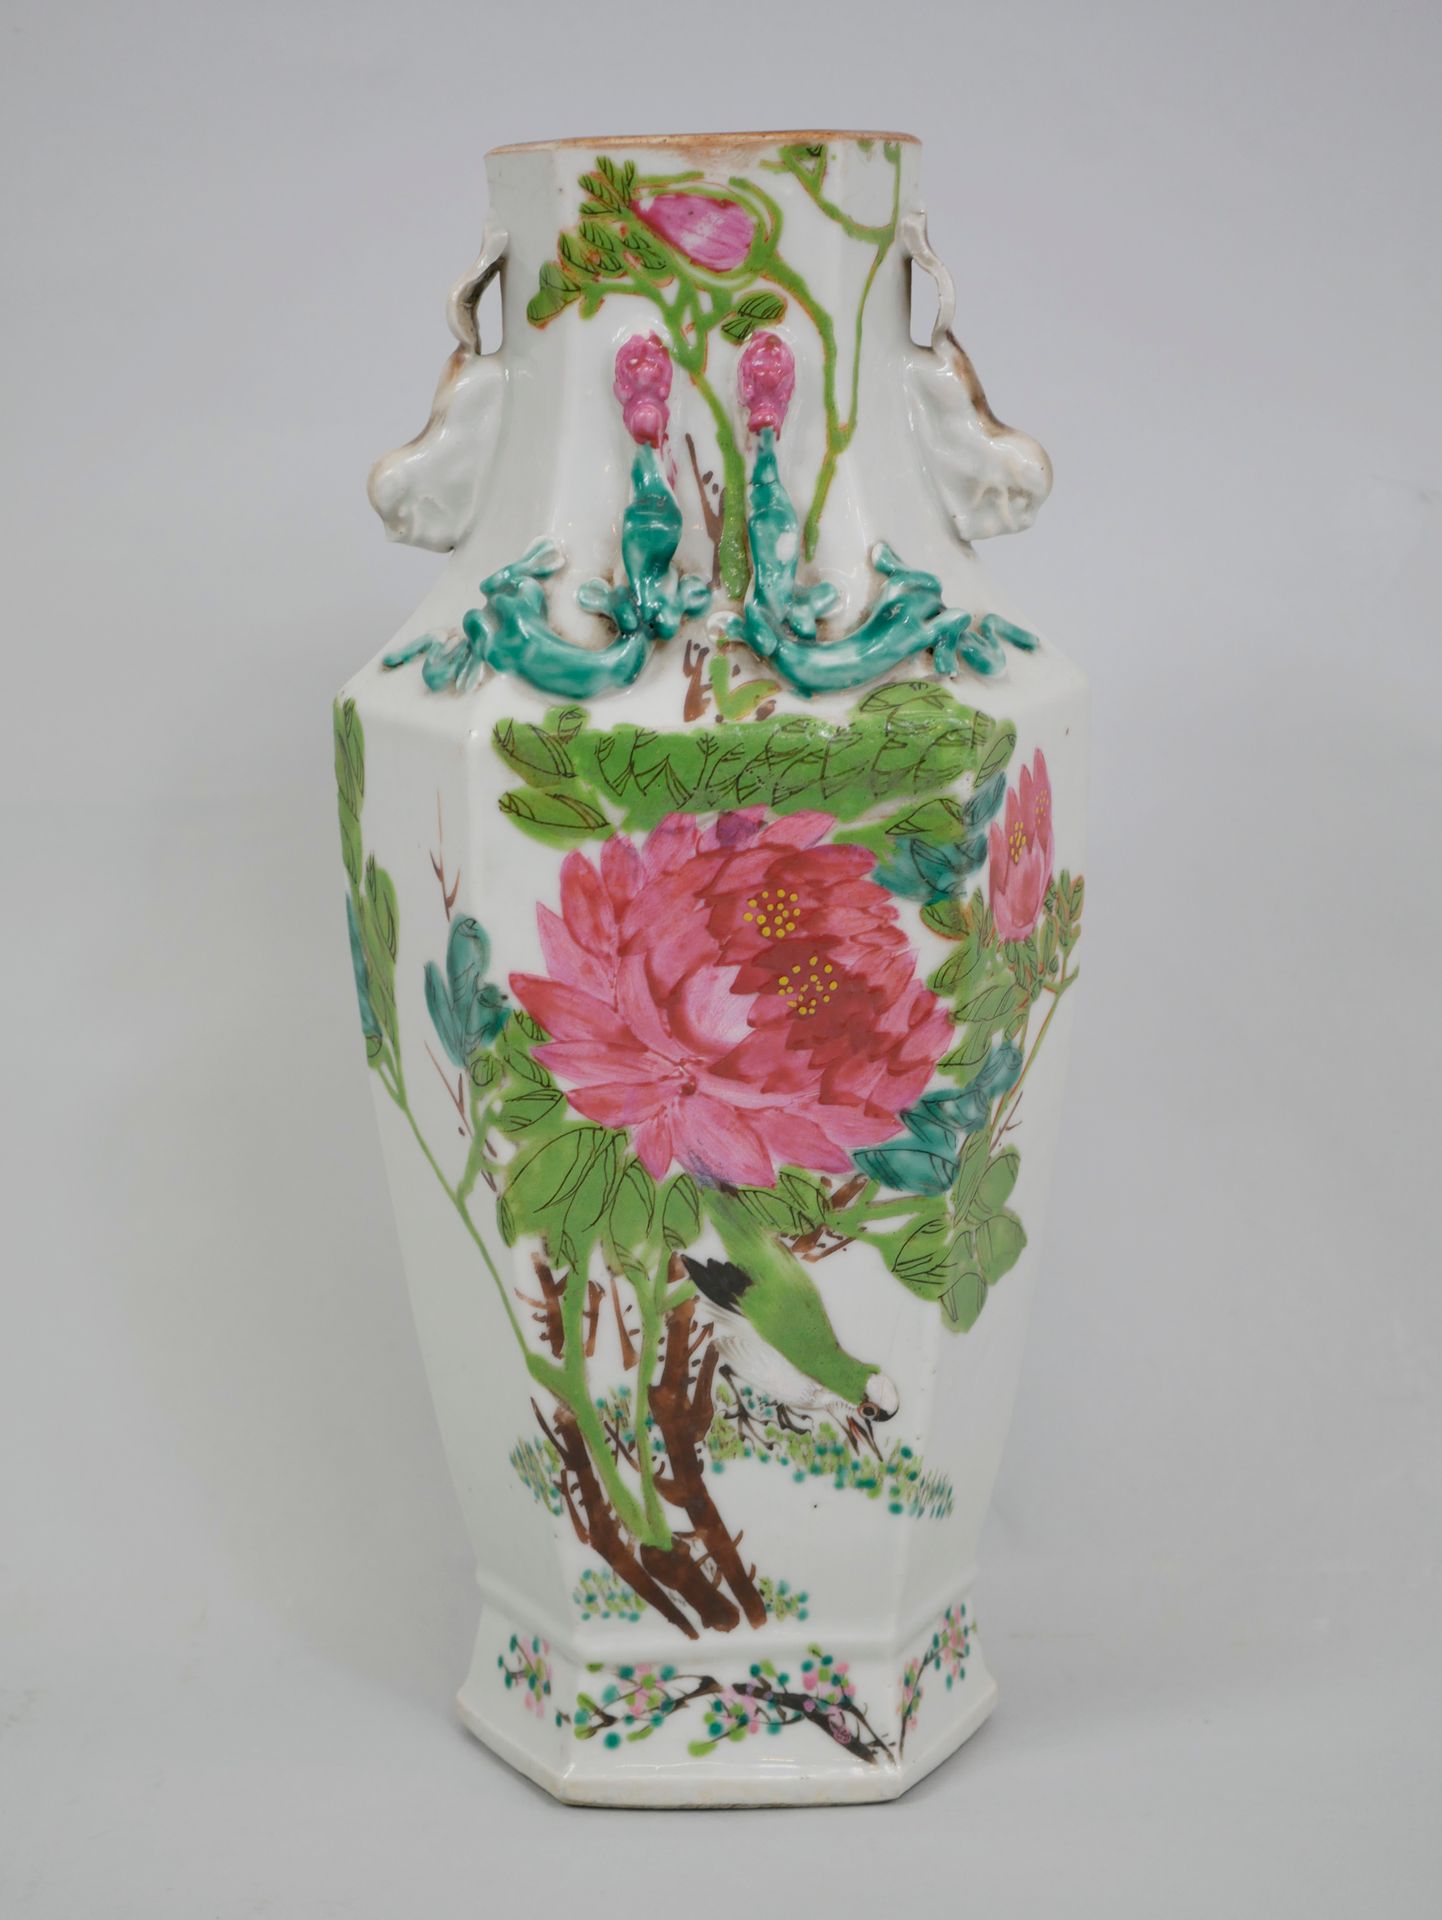 Null 中国，20世纪，背面有标记。六角形花瓶，装饰有鲜花、诗歌和变幻的把手。多色珐琅彩瓷器。高度：32.5厘米。一个边缘有小的损伤。